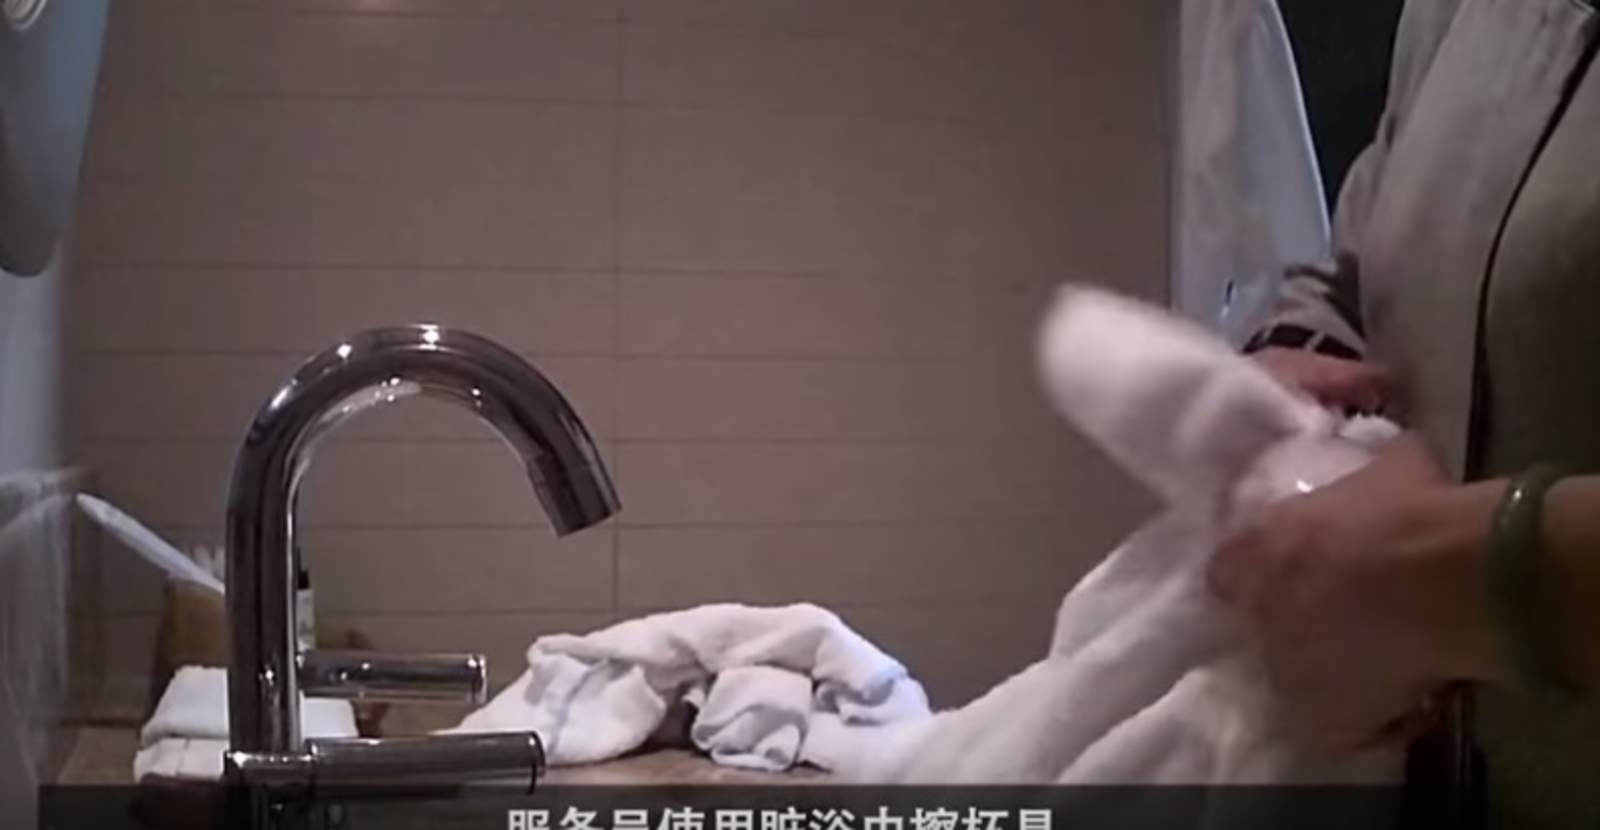 VIRAL: Video revela calidad de higiene en hoteles lujosos de China